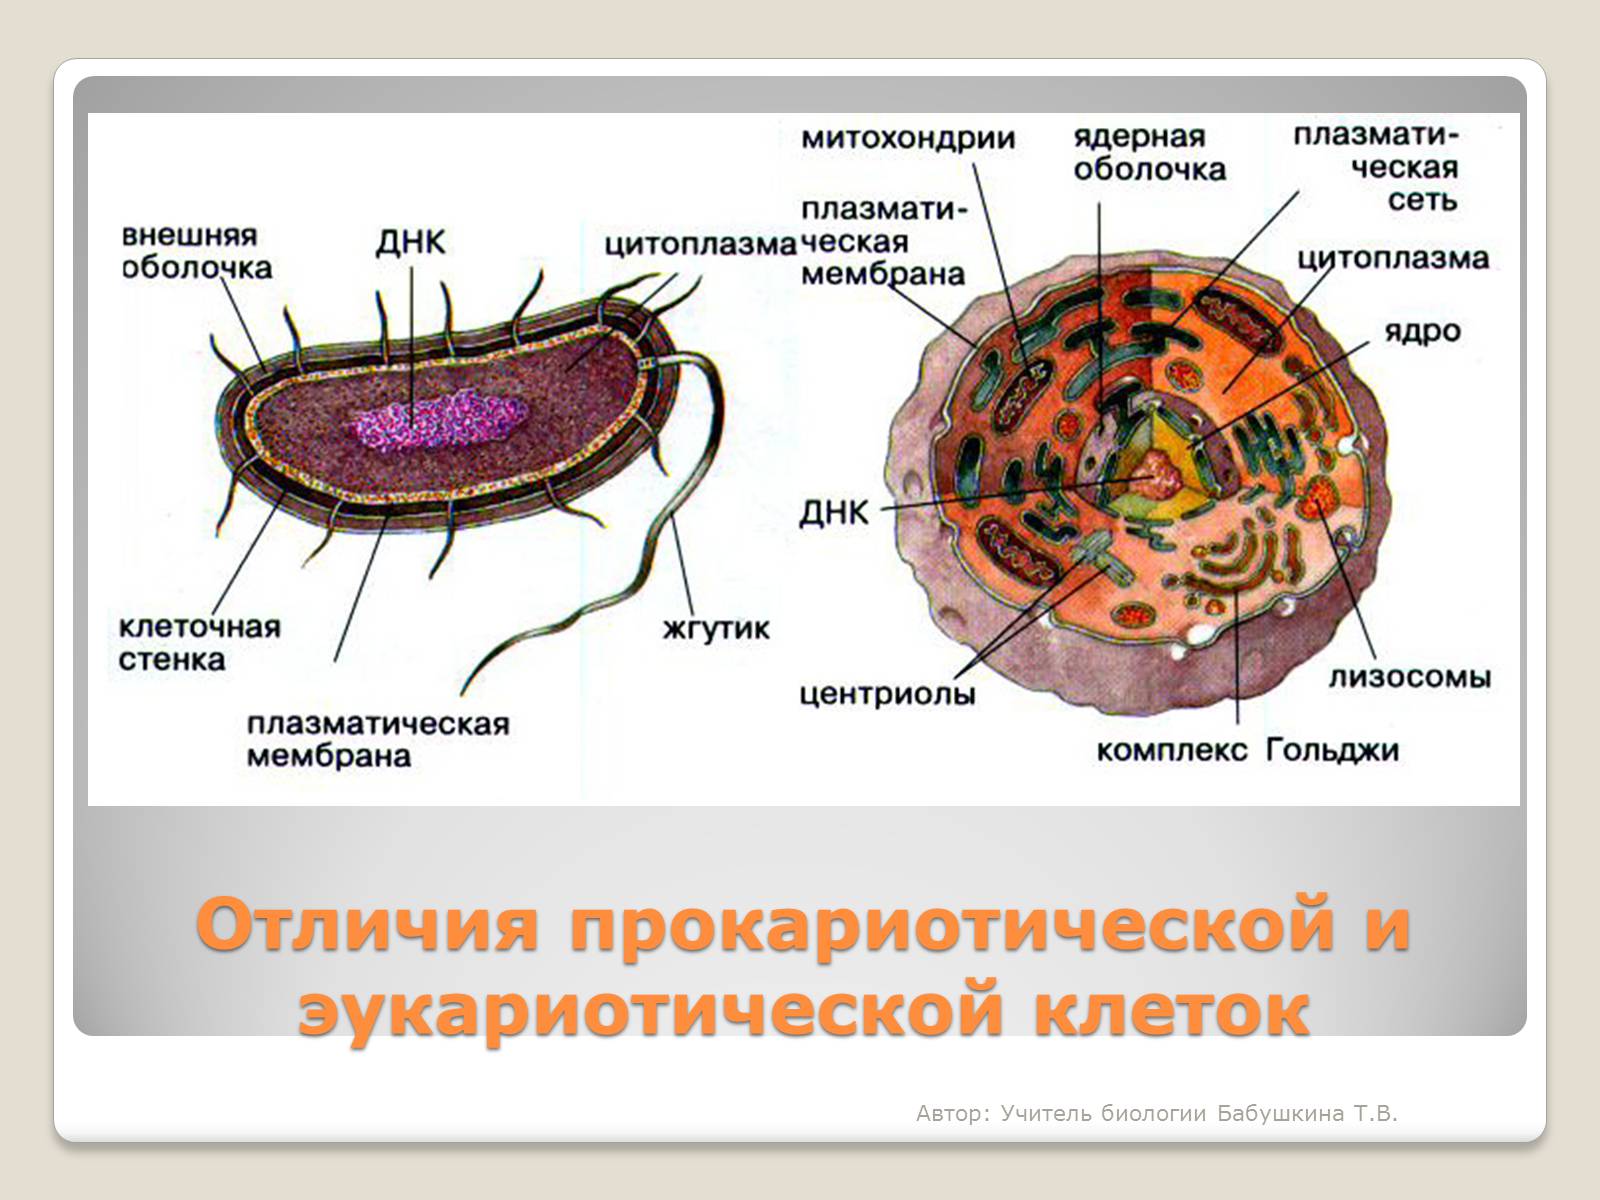 Структура клеток прокариот. Строение бактерии прокариот. Строение бактериальной клетки прокариот. Прокариотическая клетка bacteria. Строение клетки прокариот бактерии.